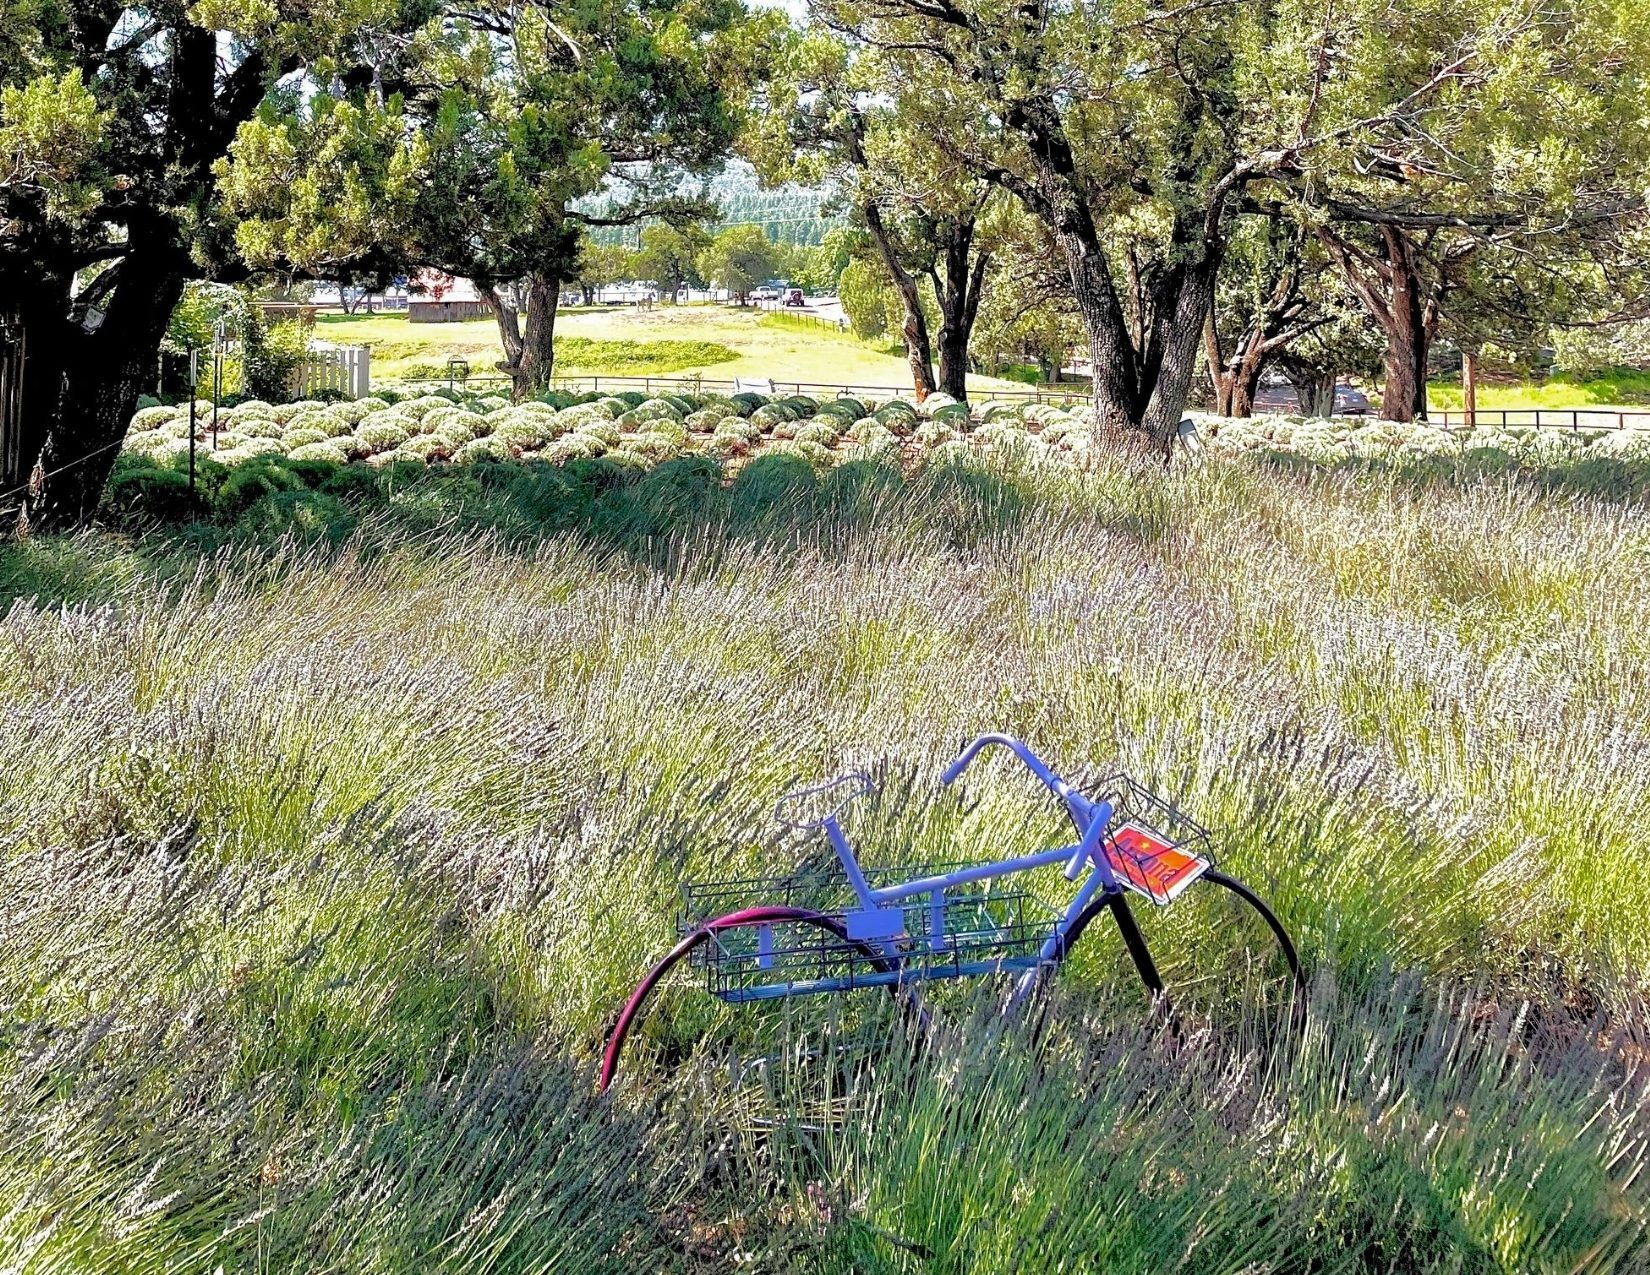 purple bike in a field of lavender in Pine, Arizona